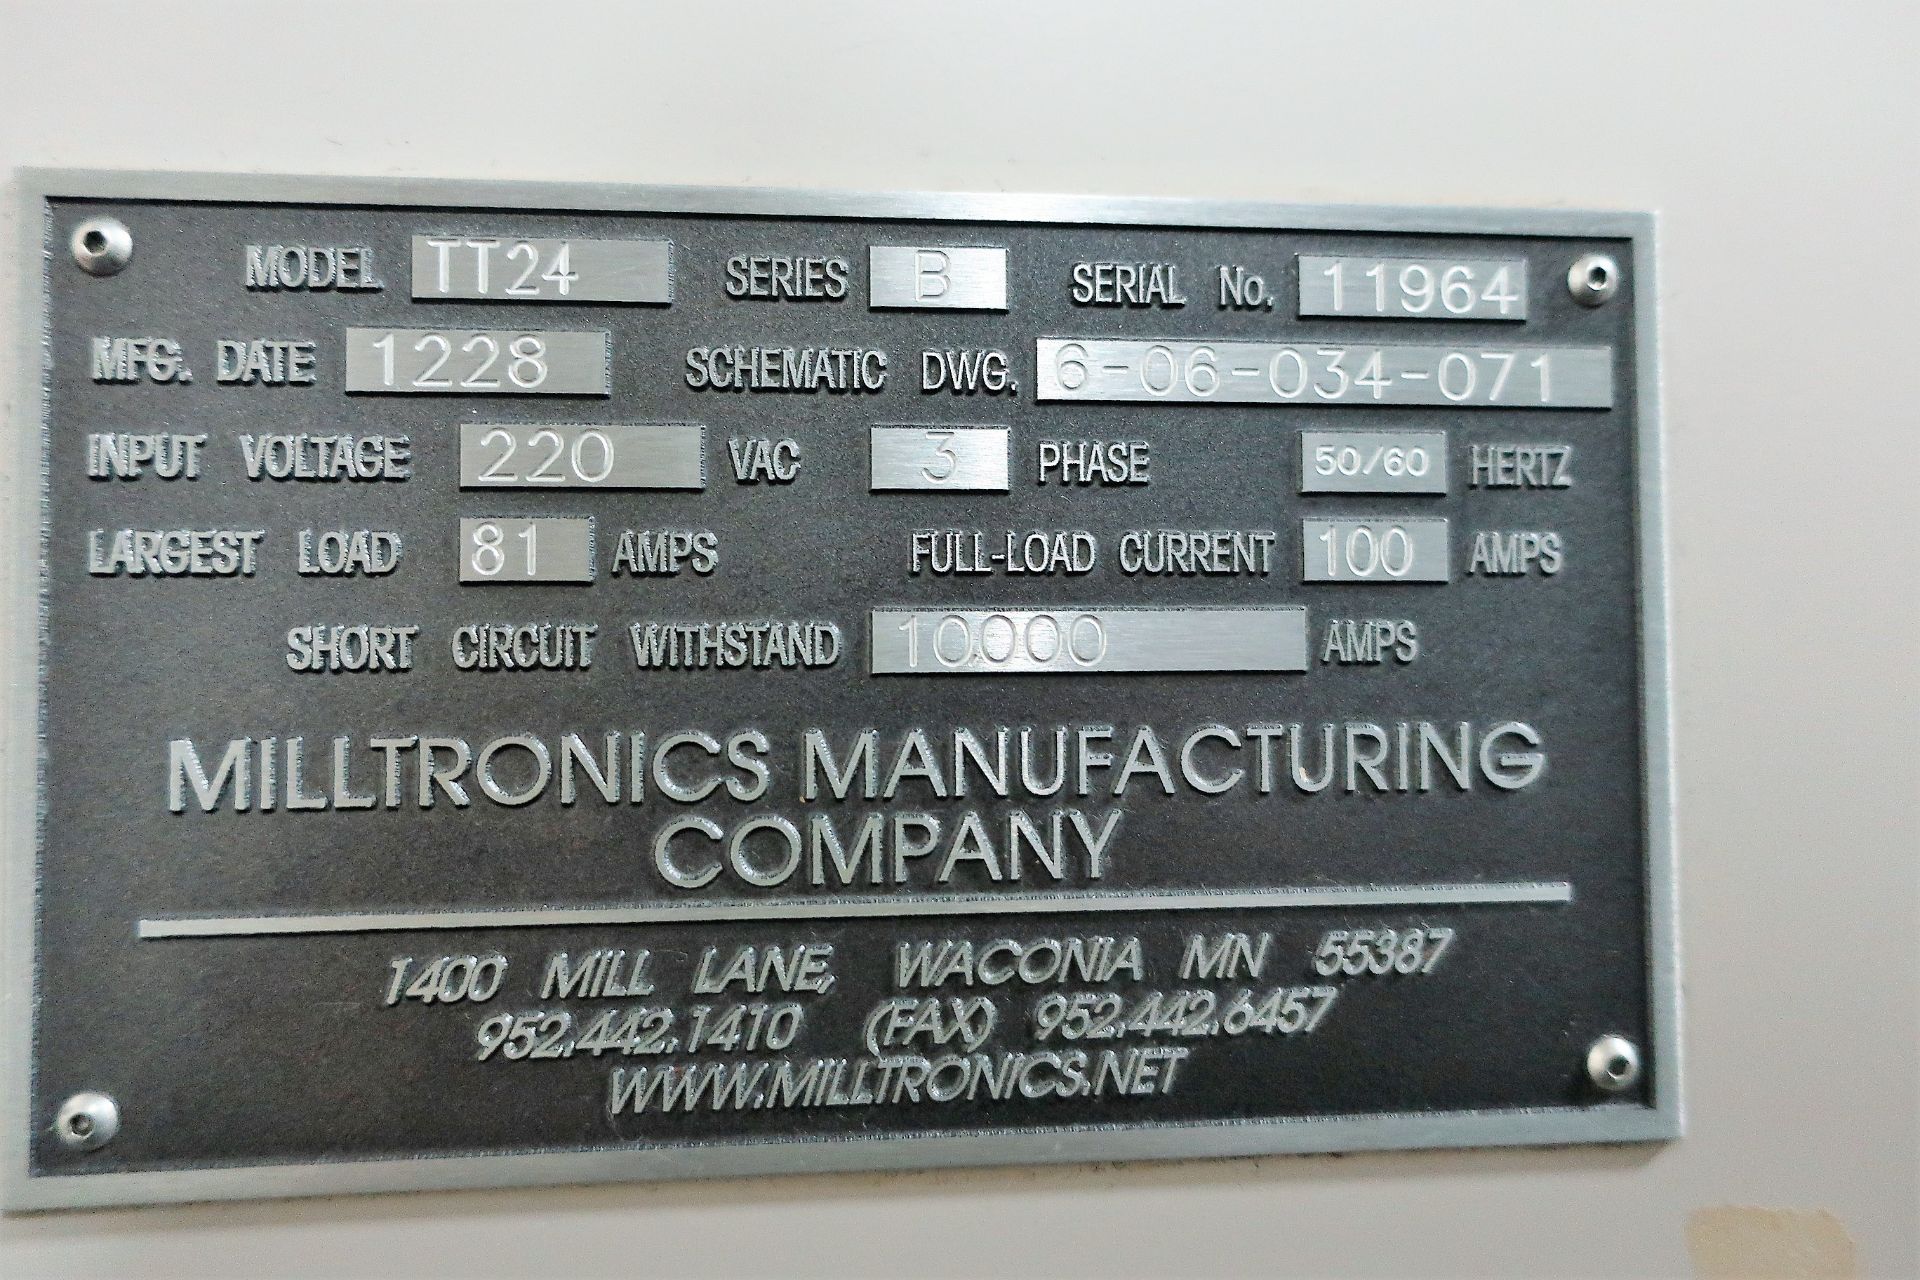 MILLTRONICS TT24 3-AXIS CNC VERTICAL MACHINING CENTER, S/N 11964, NEW 2012 - Image 9 of 10